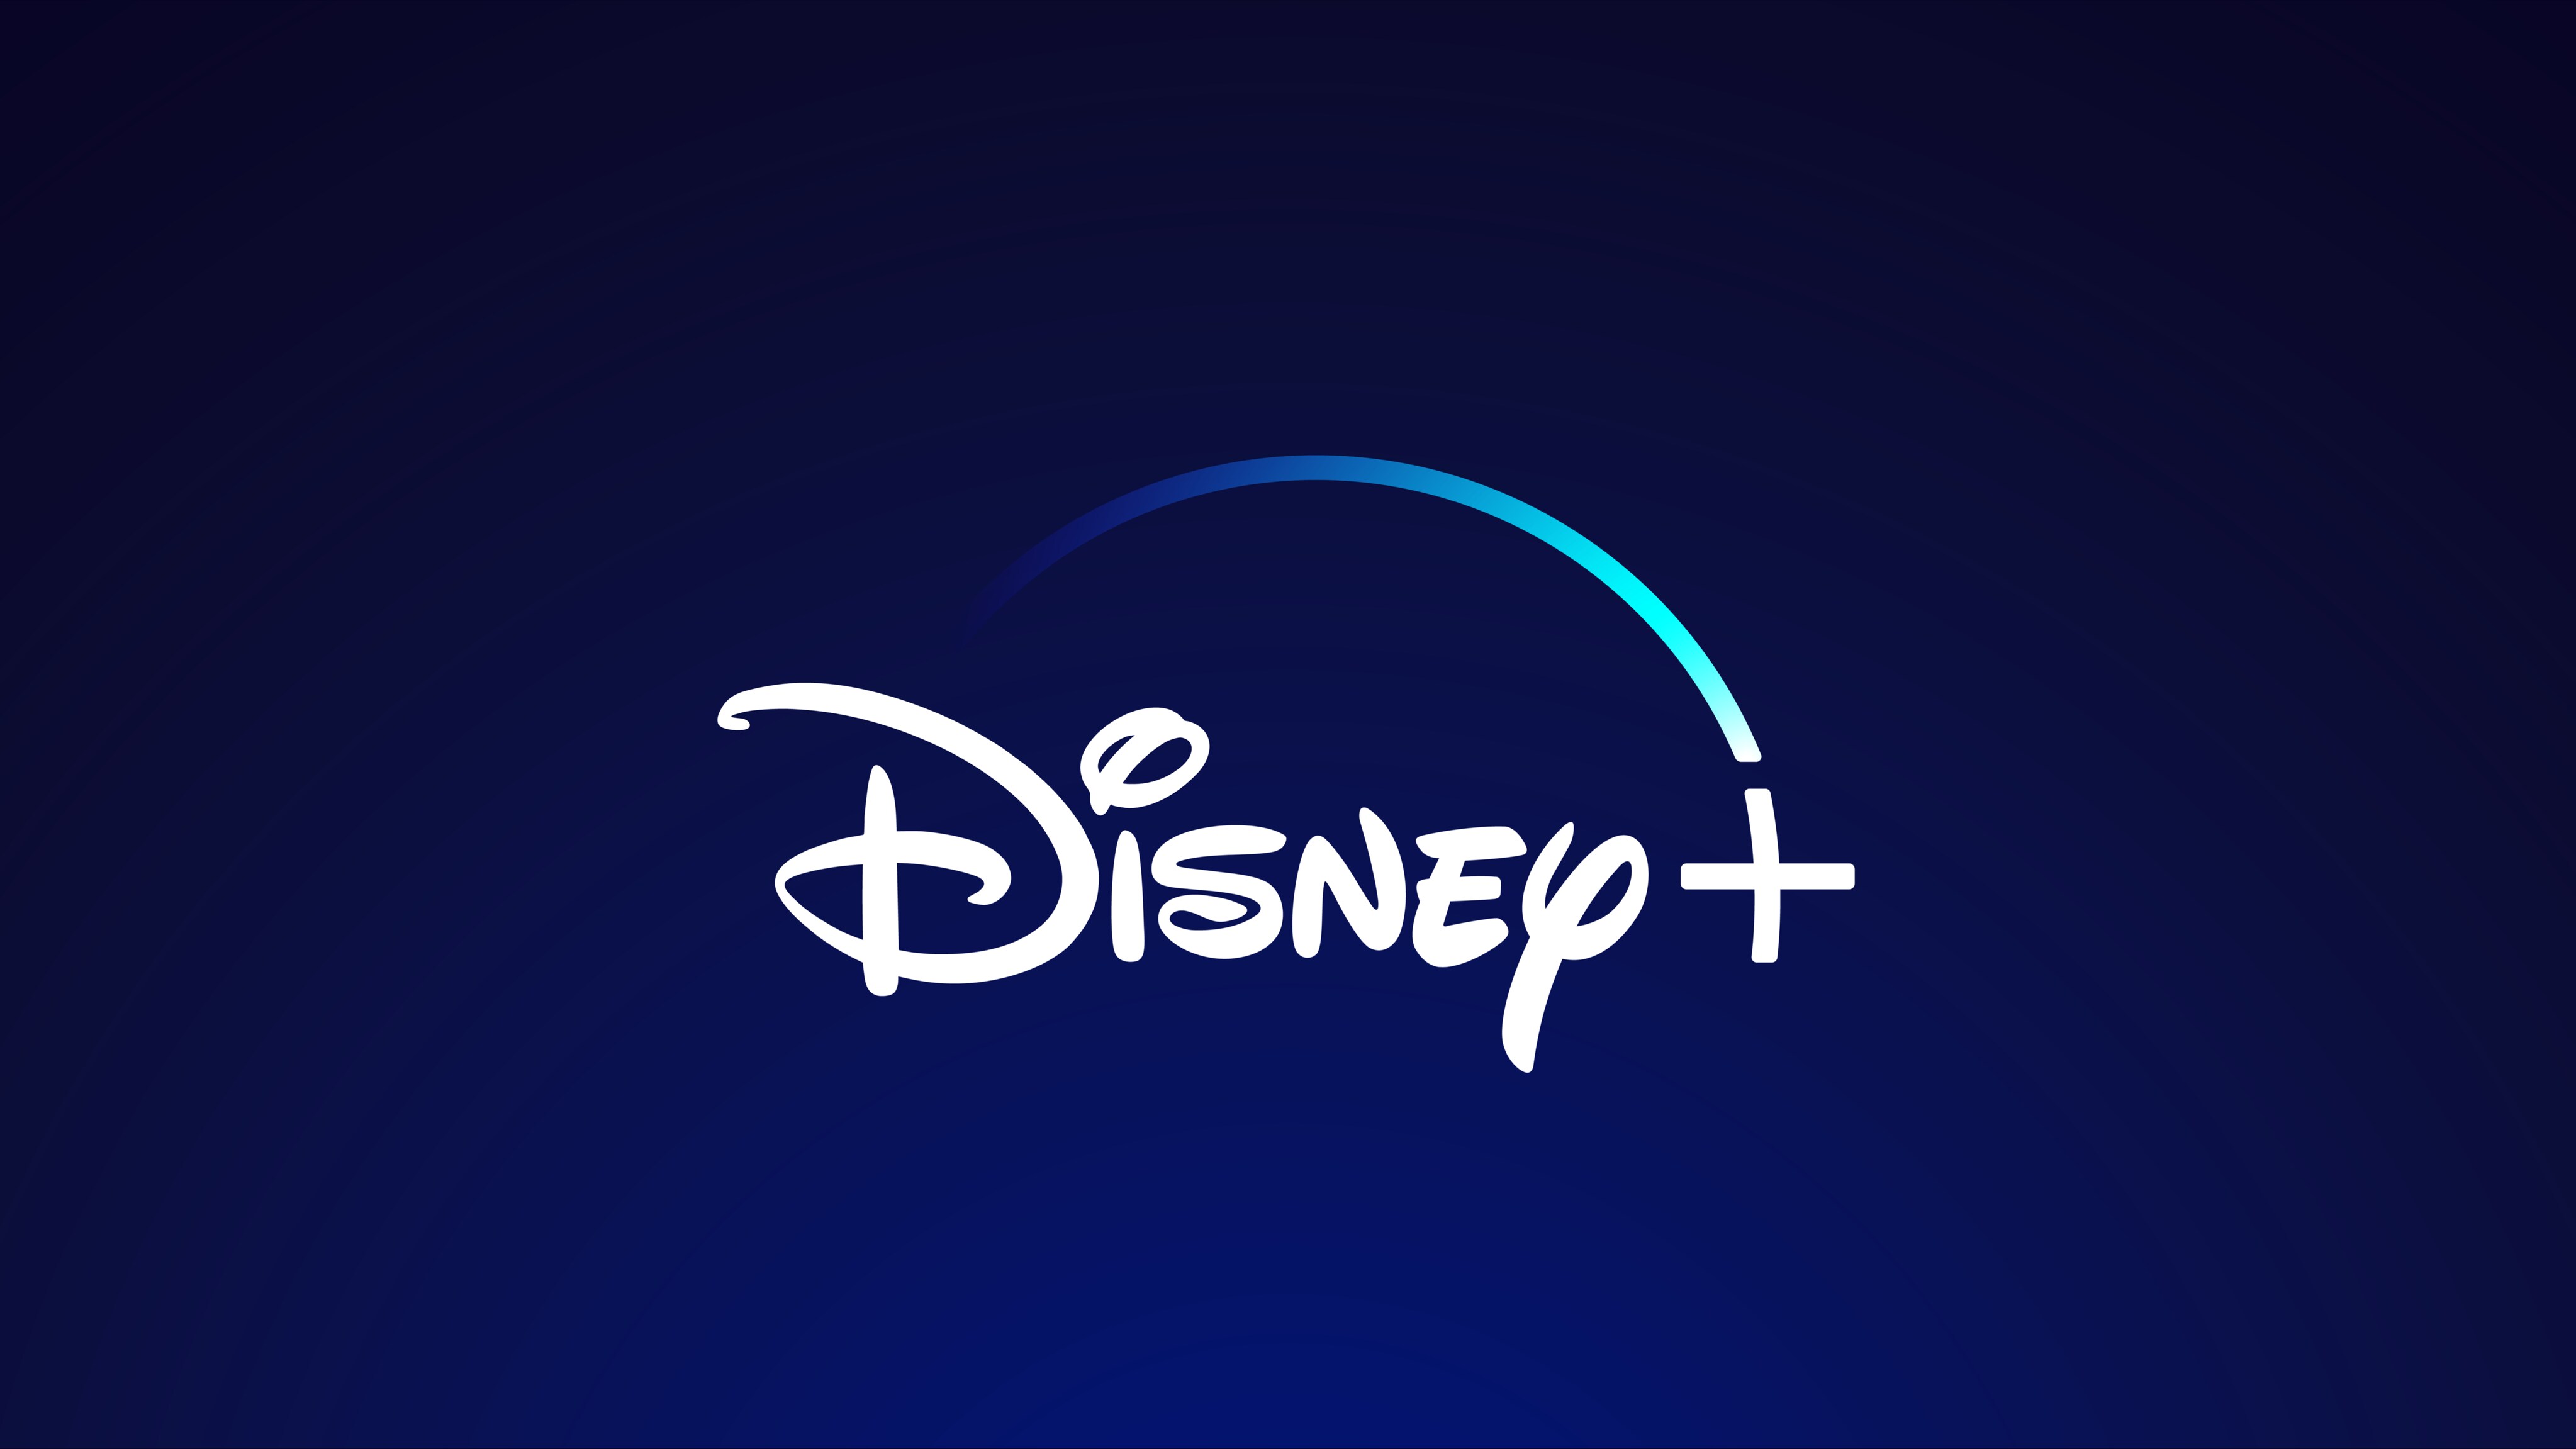 Next on Disney+: July 2020